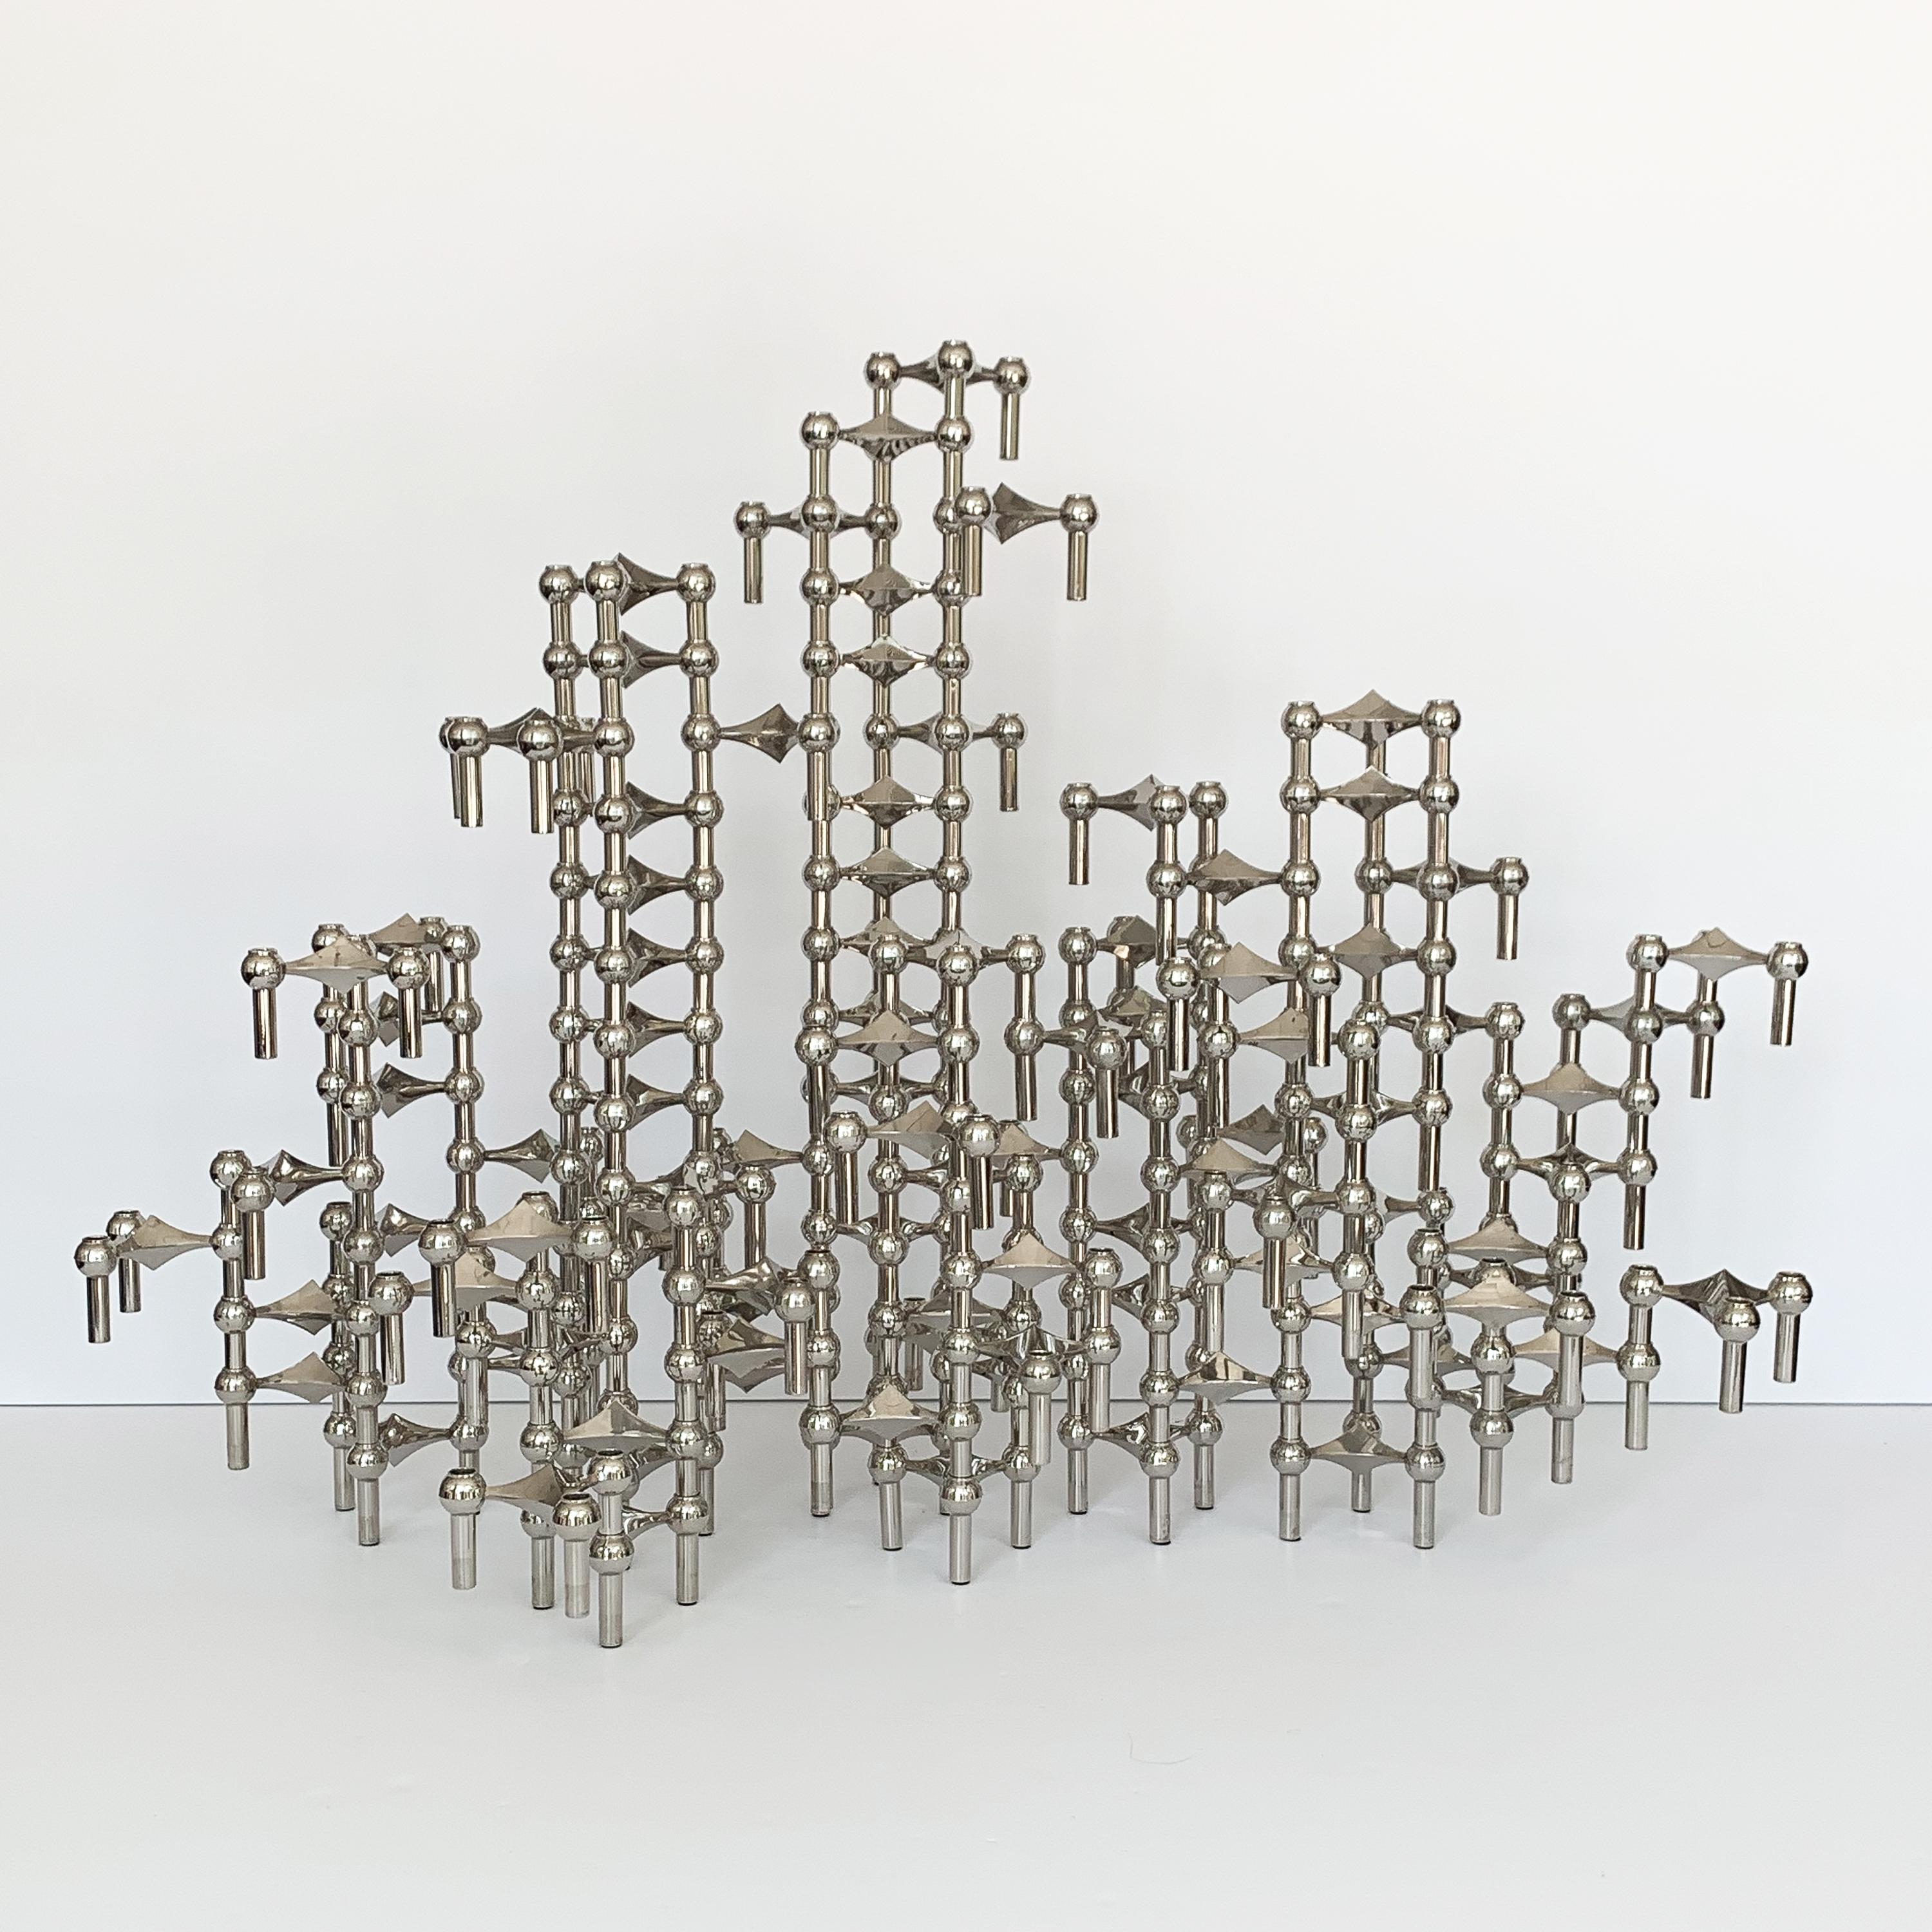 German Set of 100 Piece Modular Candlestick Sculpture by Fritz Nagel and Caesar Stoffi